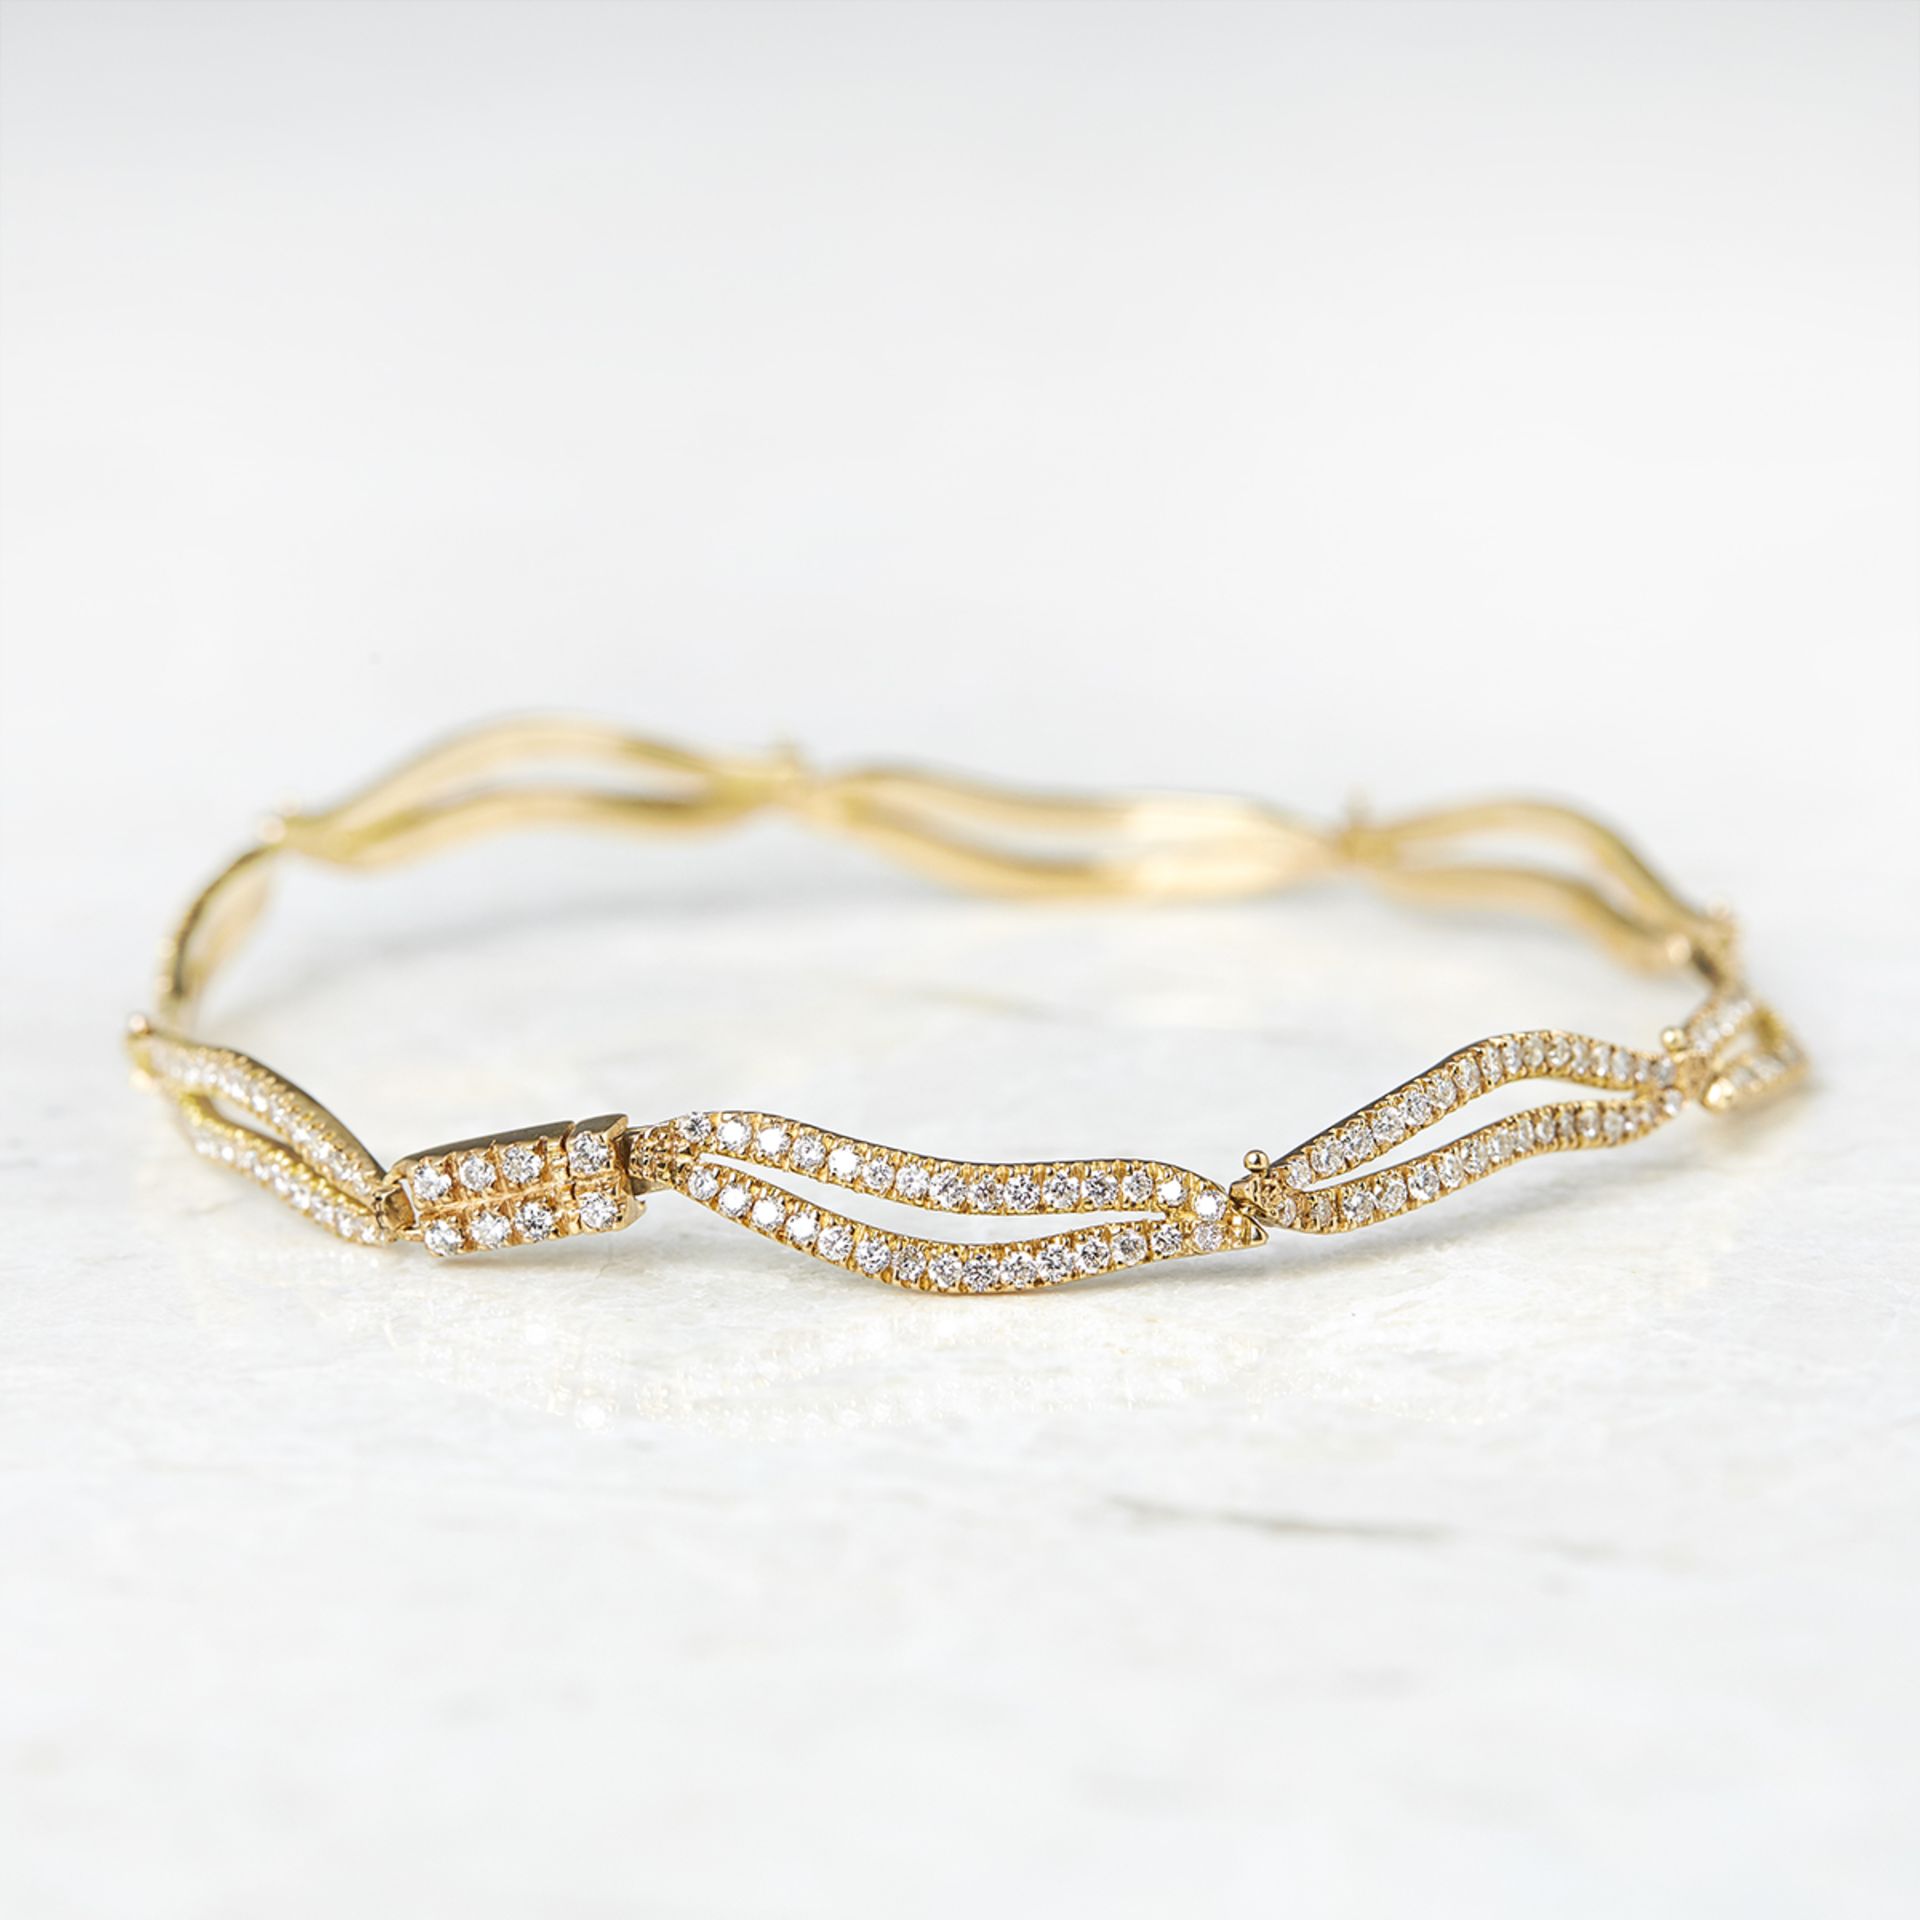 Unbranded, 18k Yellow Gold 2.56ct Diamond Wavy Link Bracelet - Image 2 of 6